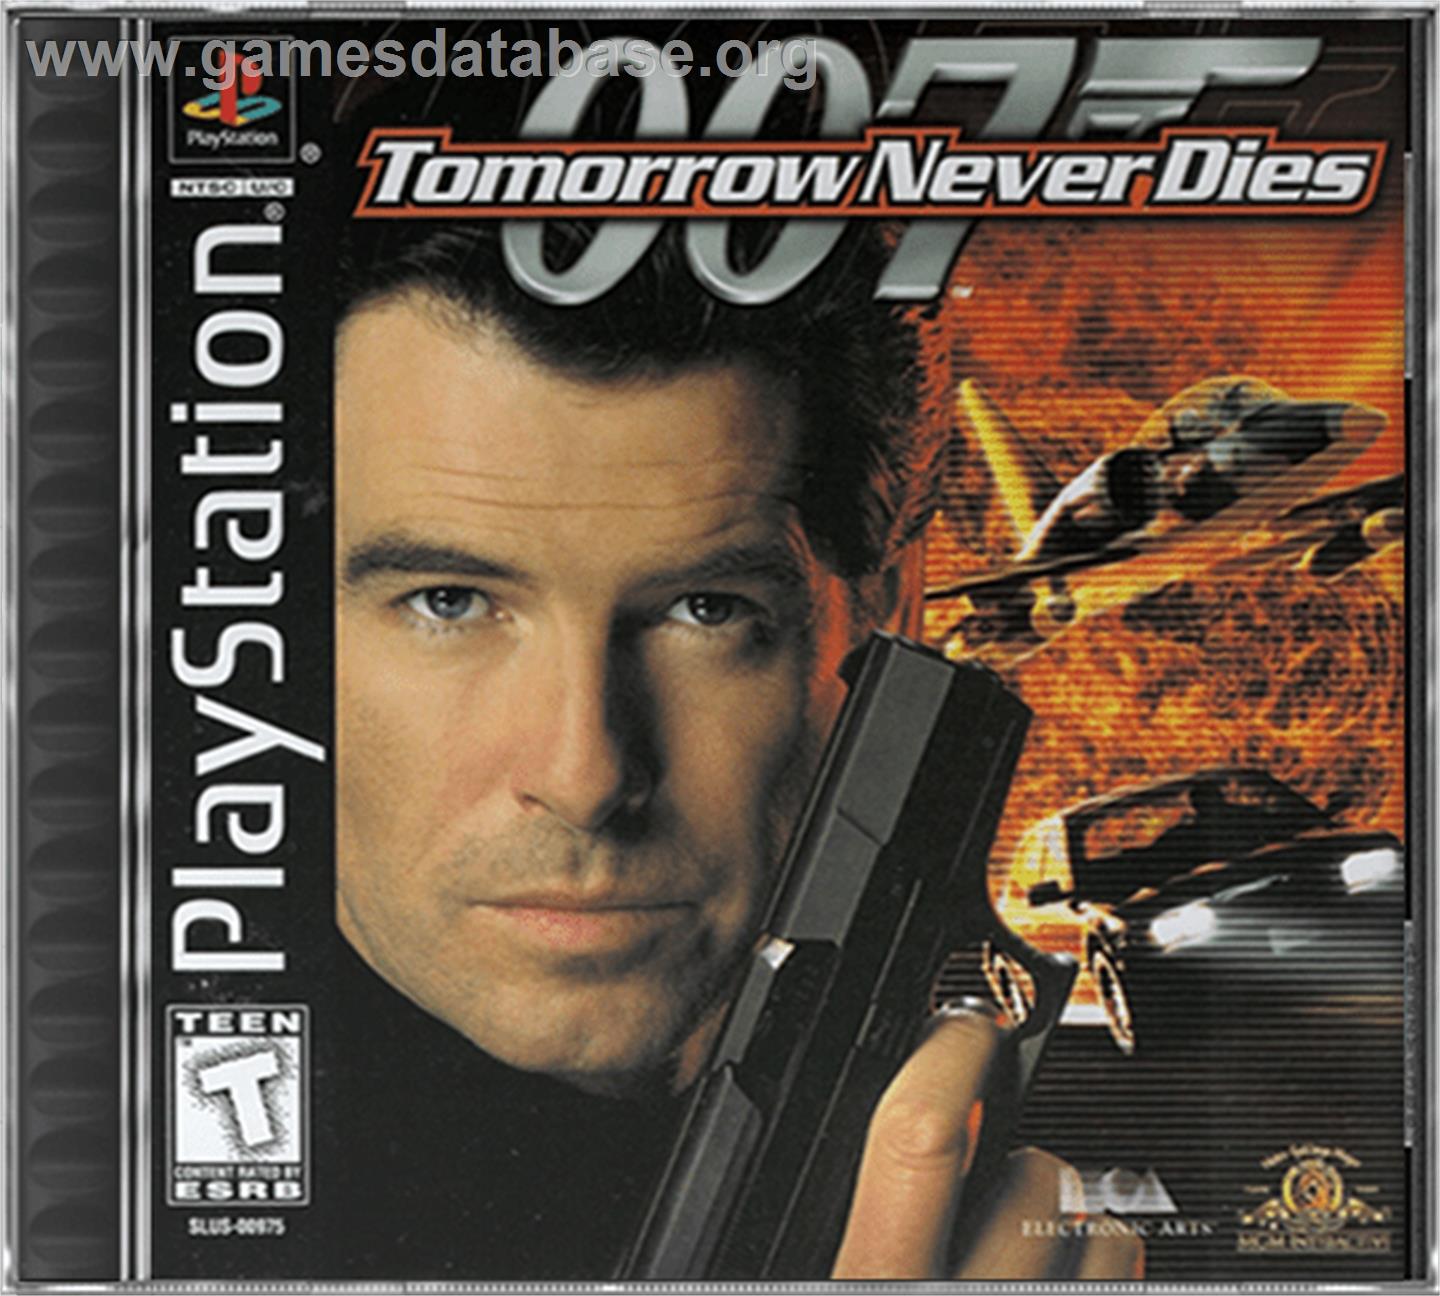 007: Tomorrow Never Dies - Sony Playstation - Artwork - Box